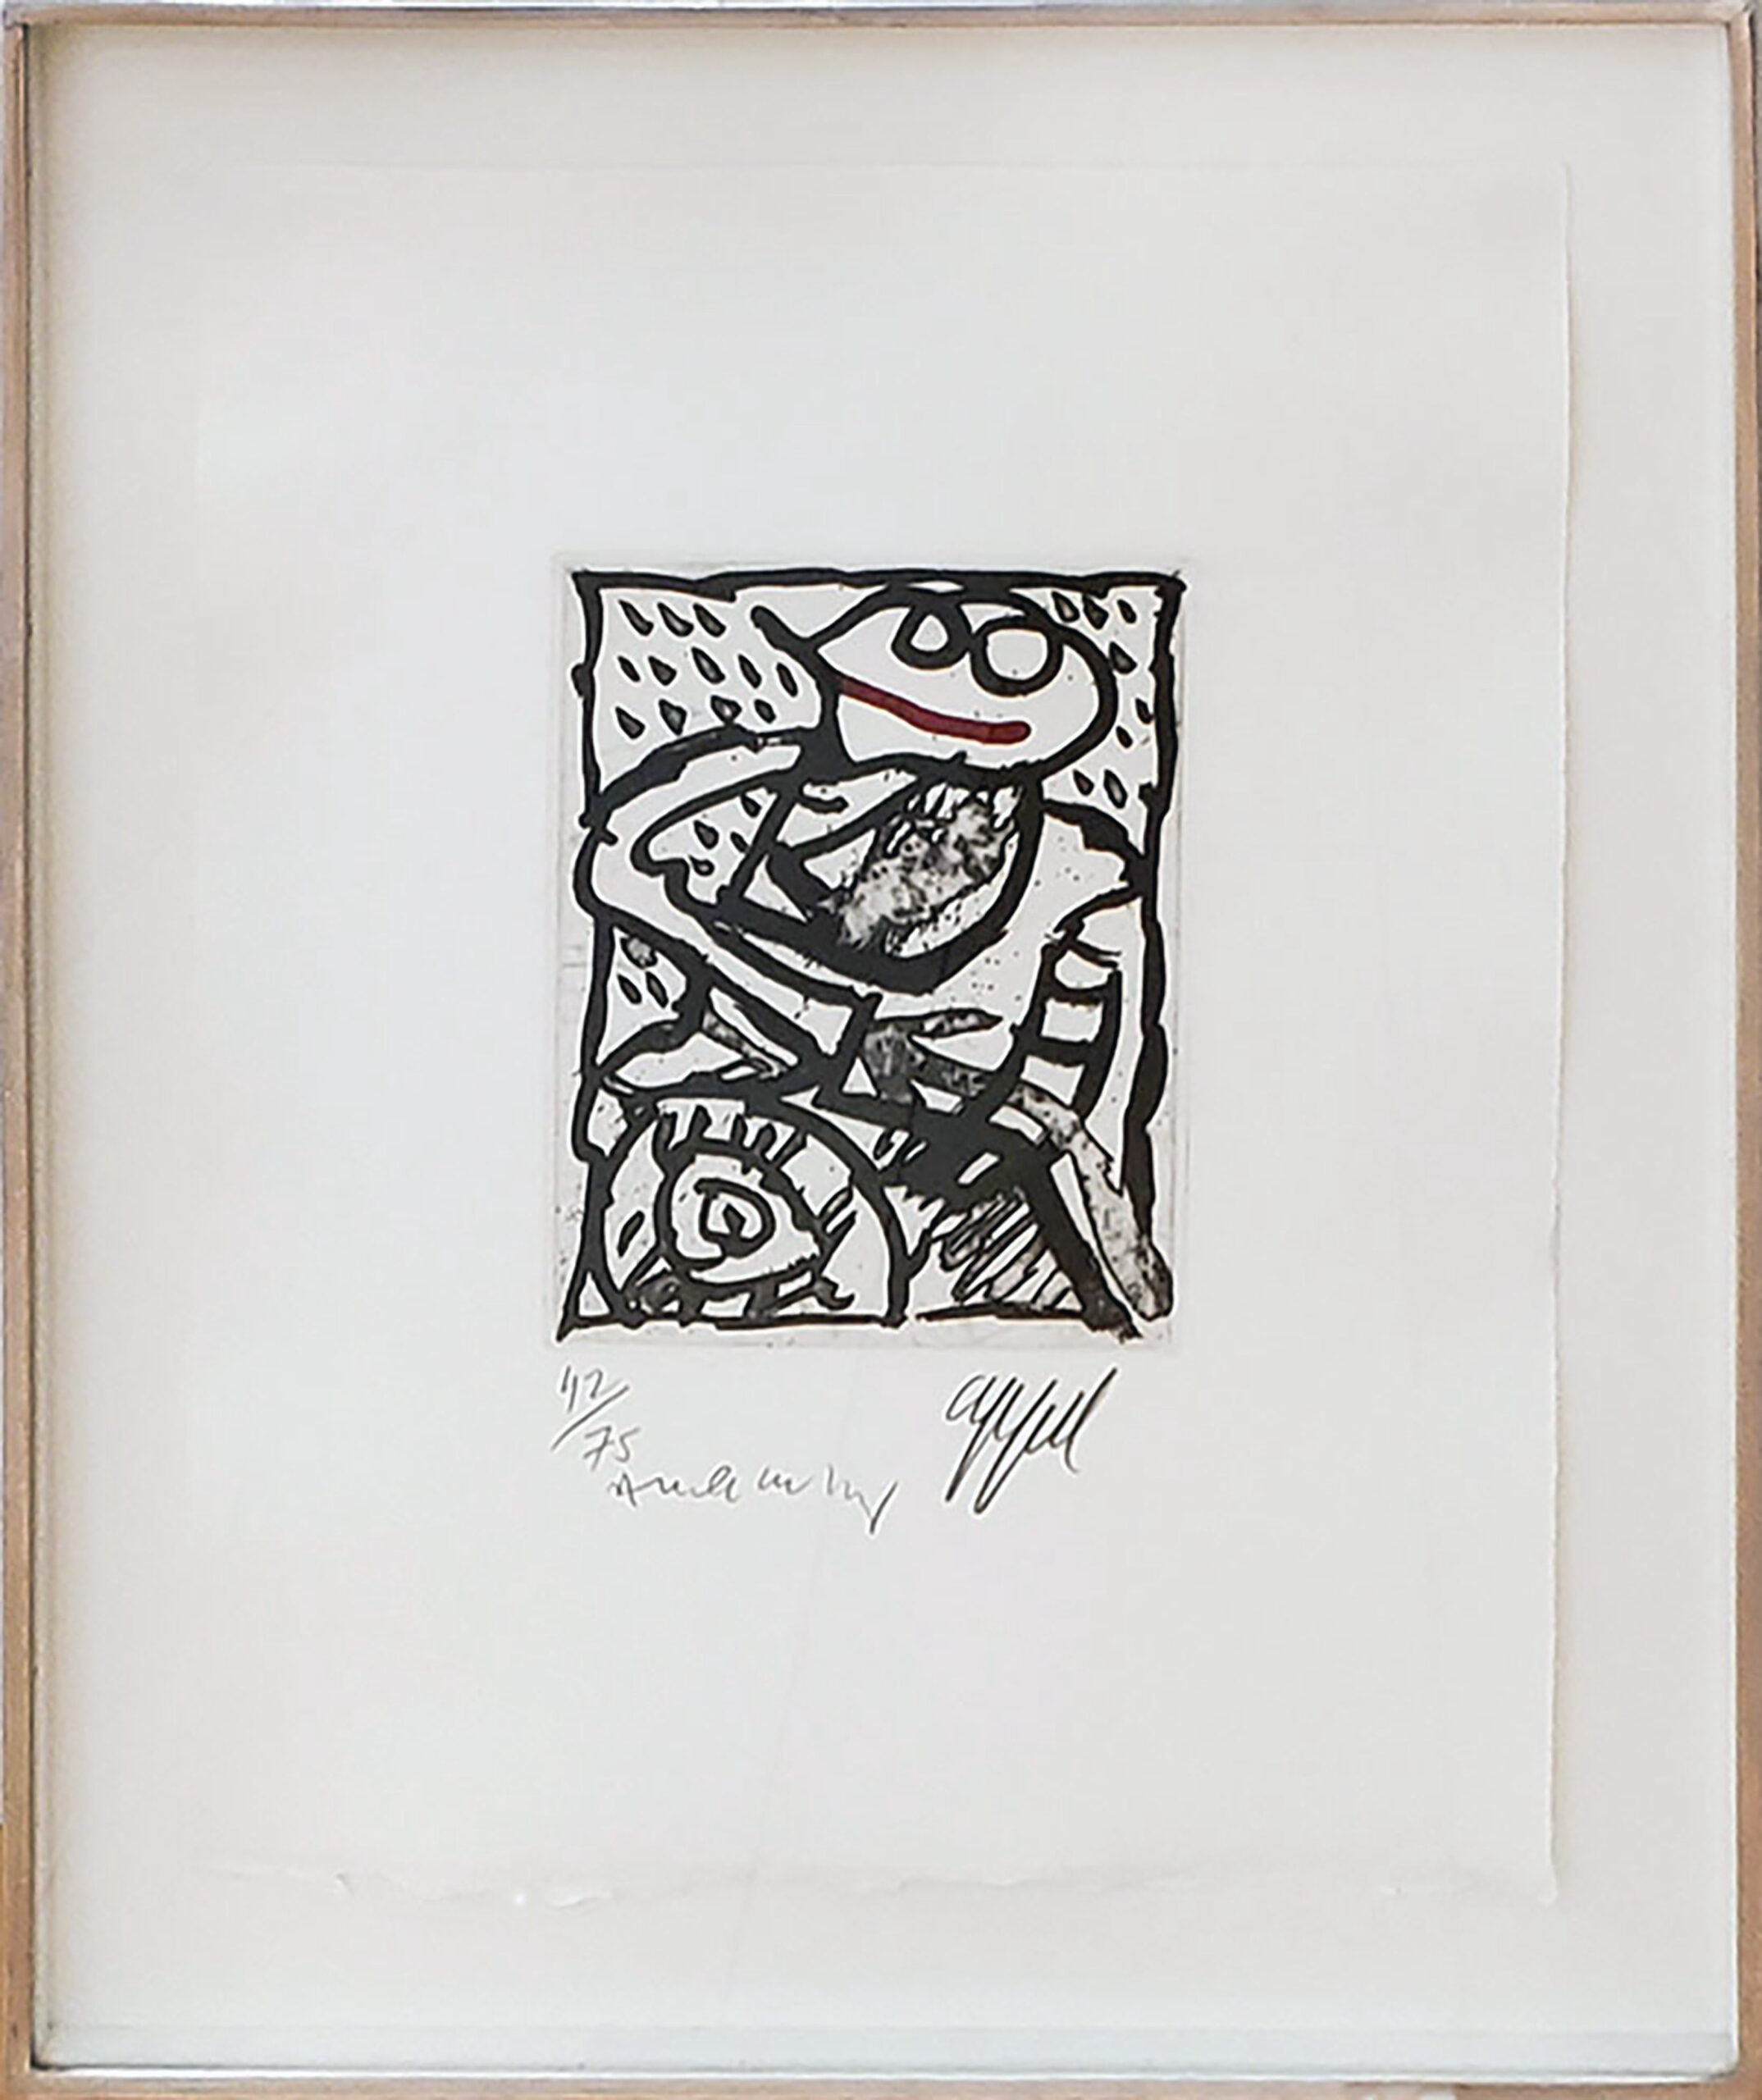 Karel Appel black and white print depicted abstracted figure framed